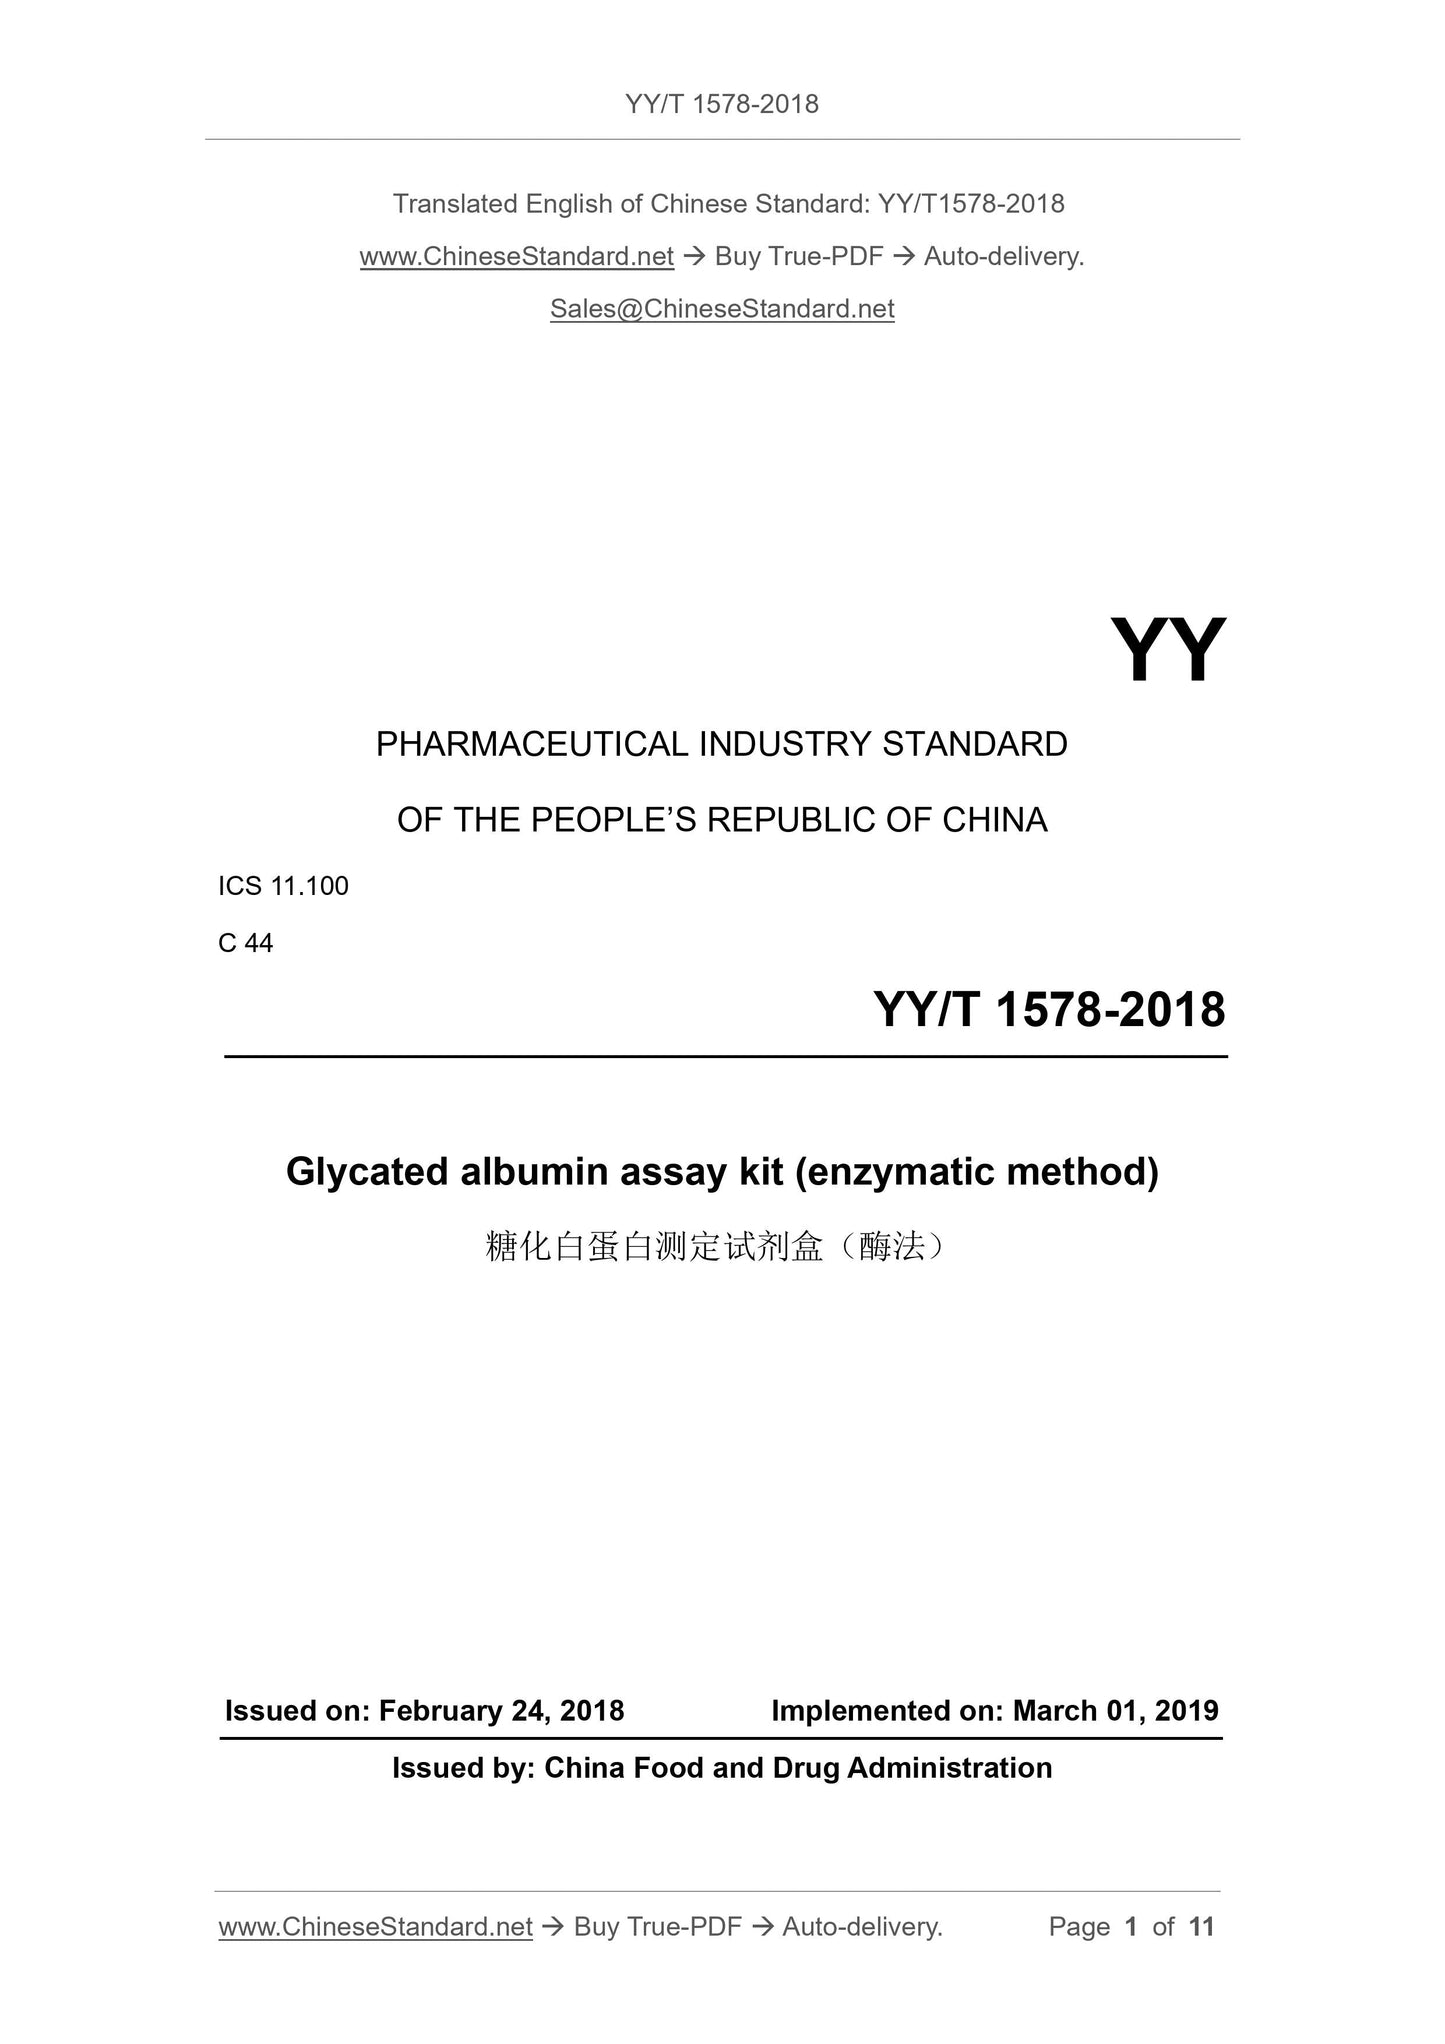 YY/T 1578-2018 Page 1